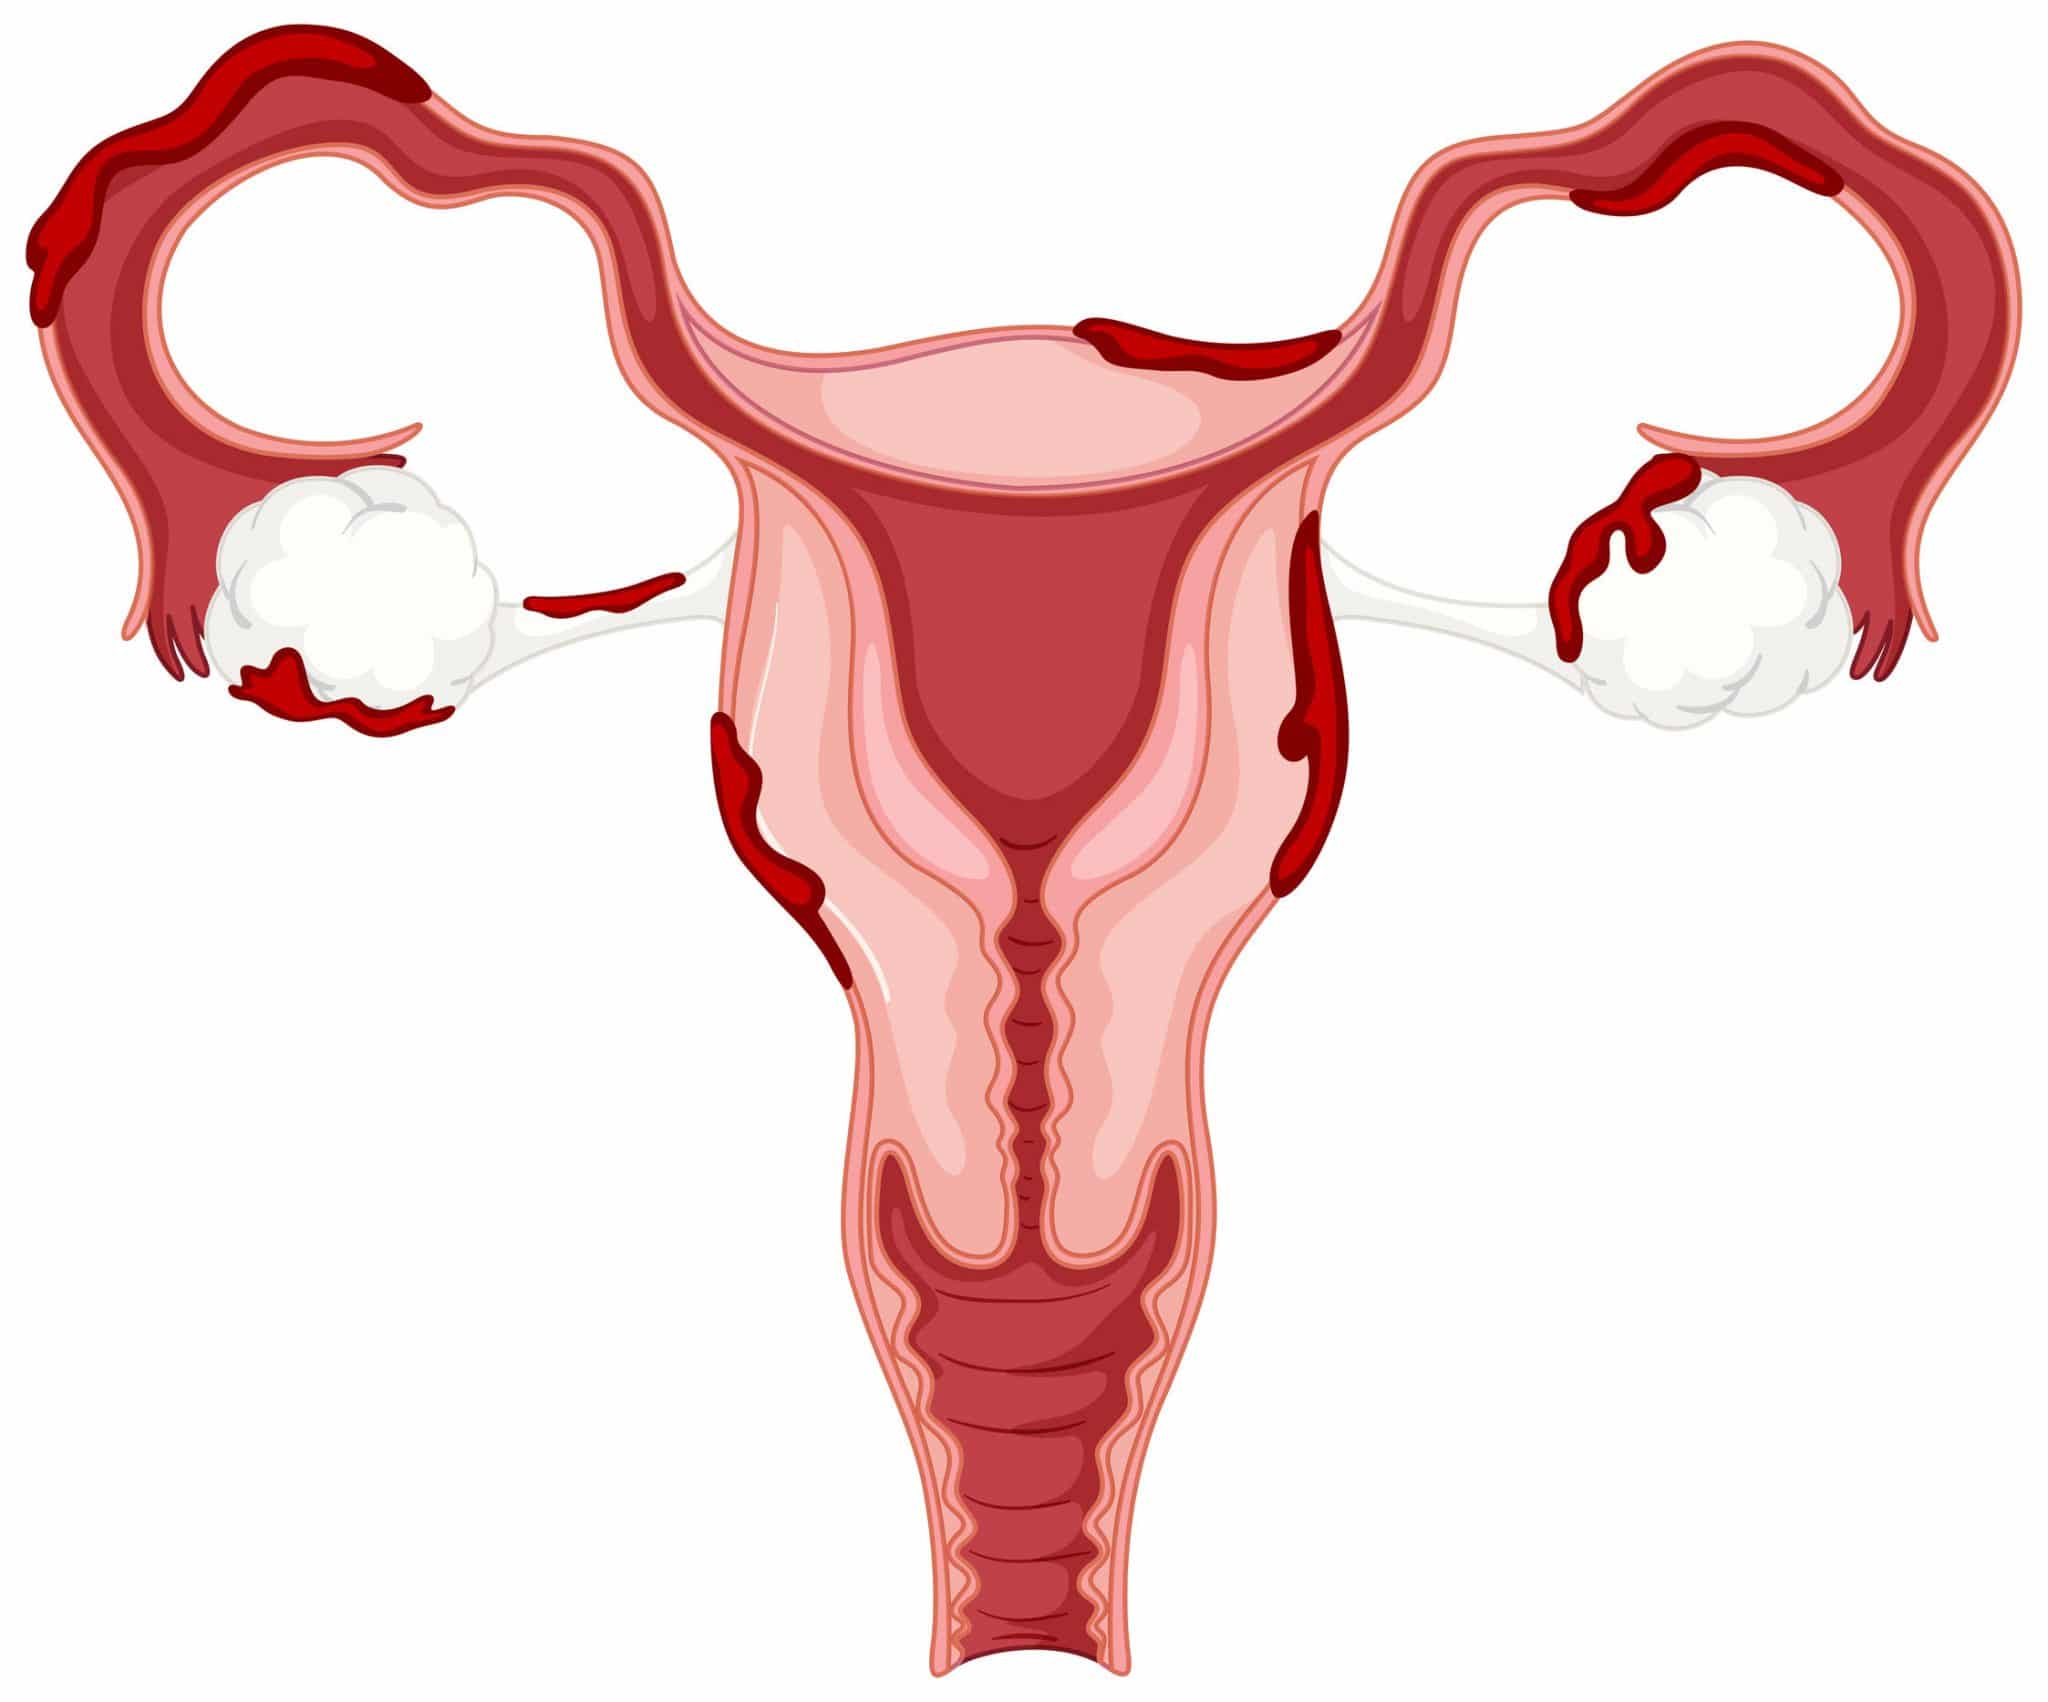 endometriose